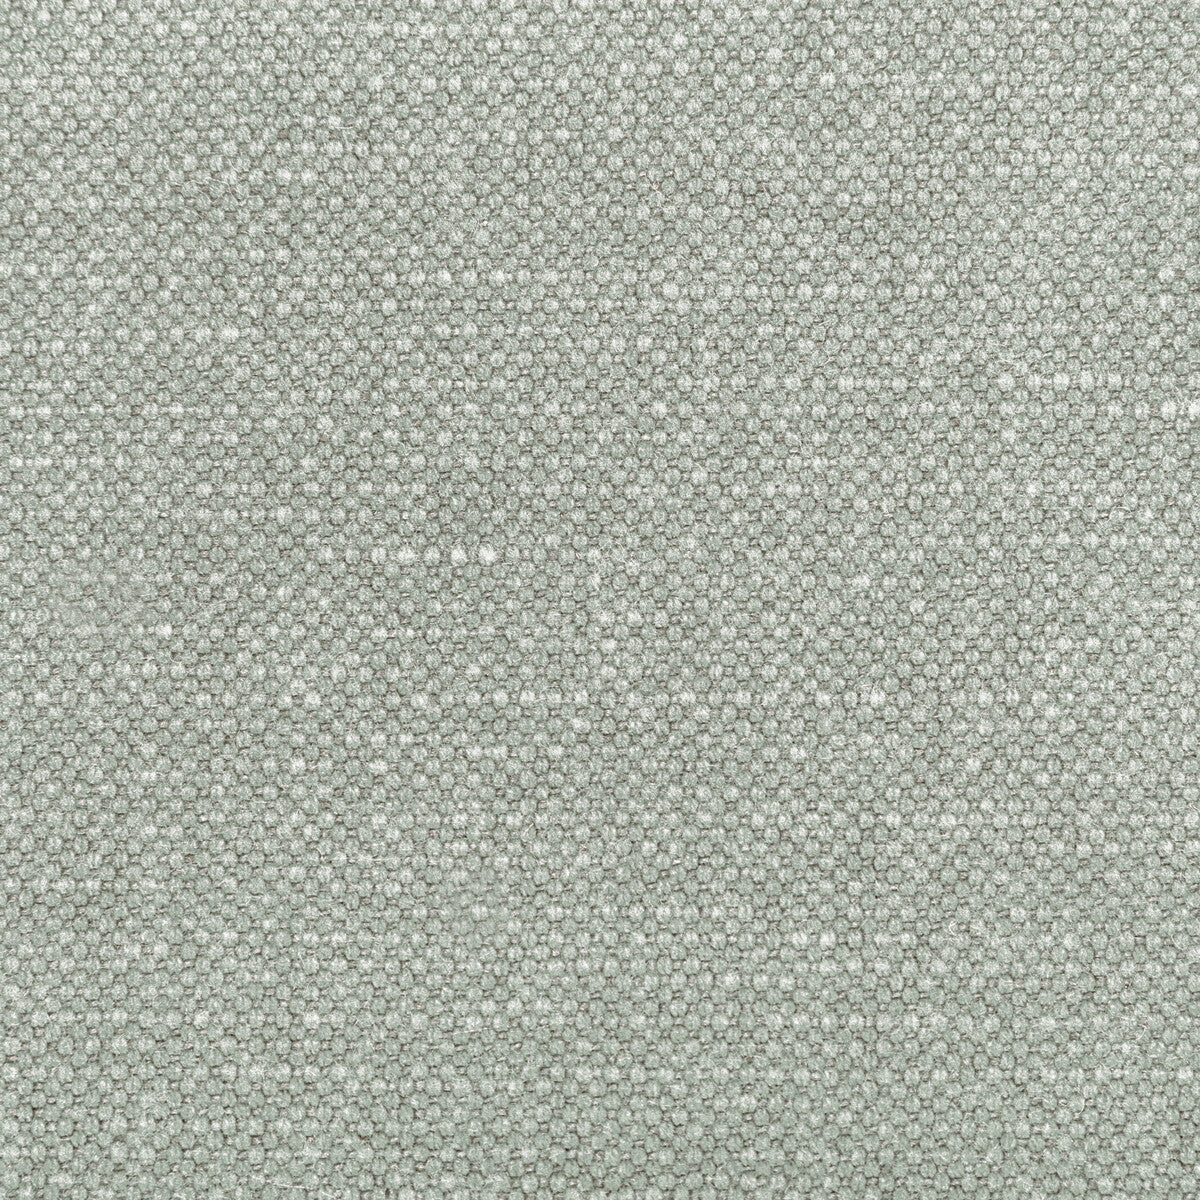 Carson fabric in porpoise color - pattern 36282.121.0 - by Kravet Basics